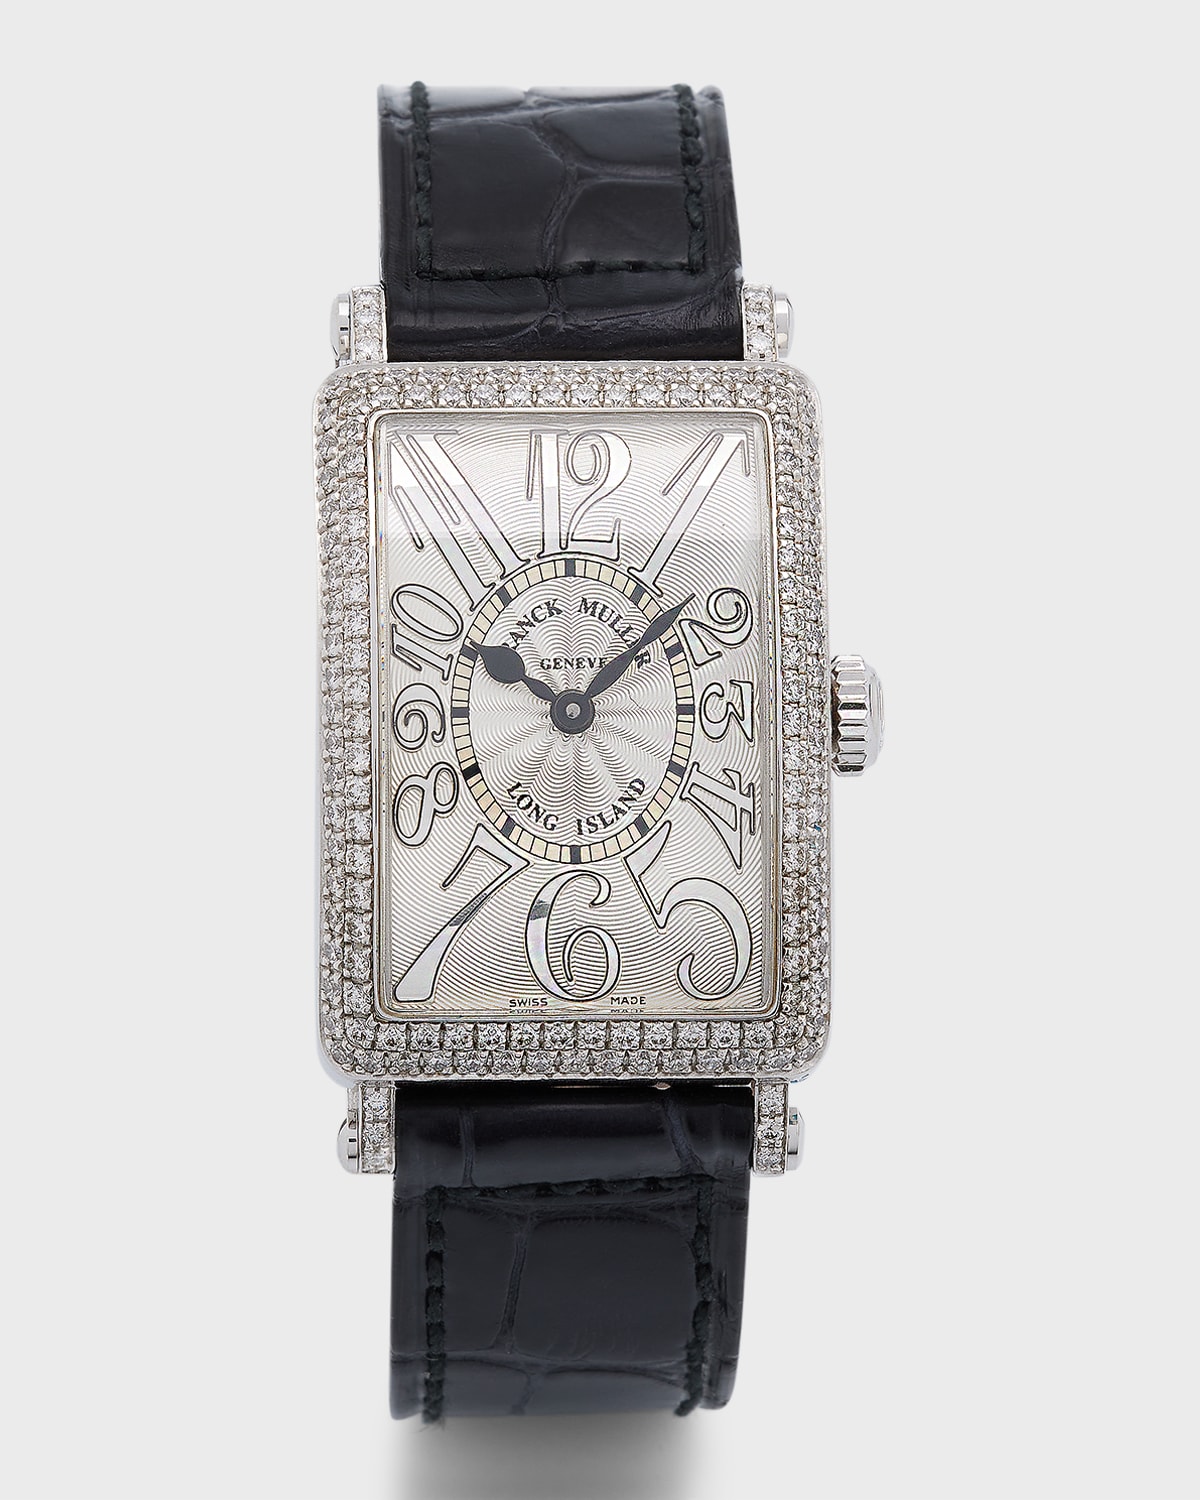 Franck Muller 18k White Gold Long Island Diamond Watch With Alligator Strap